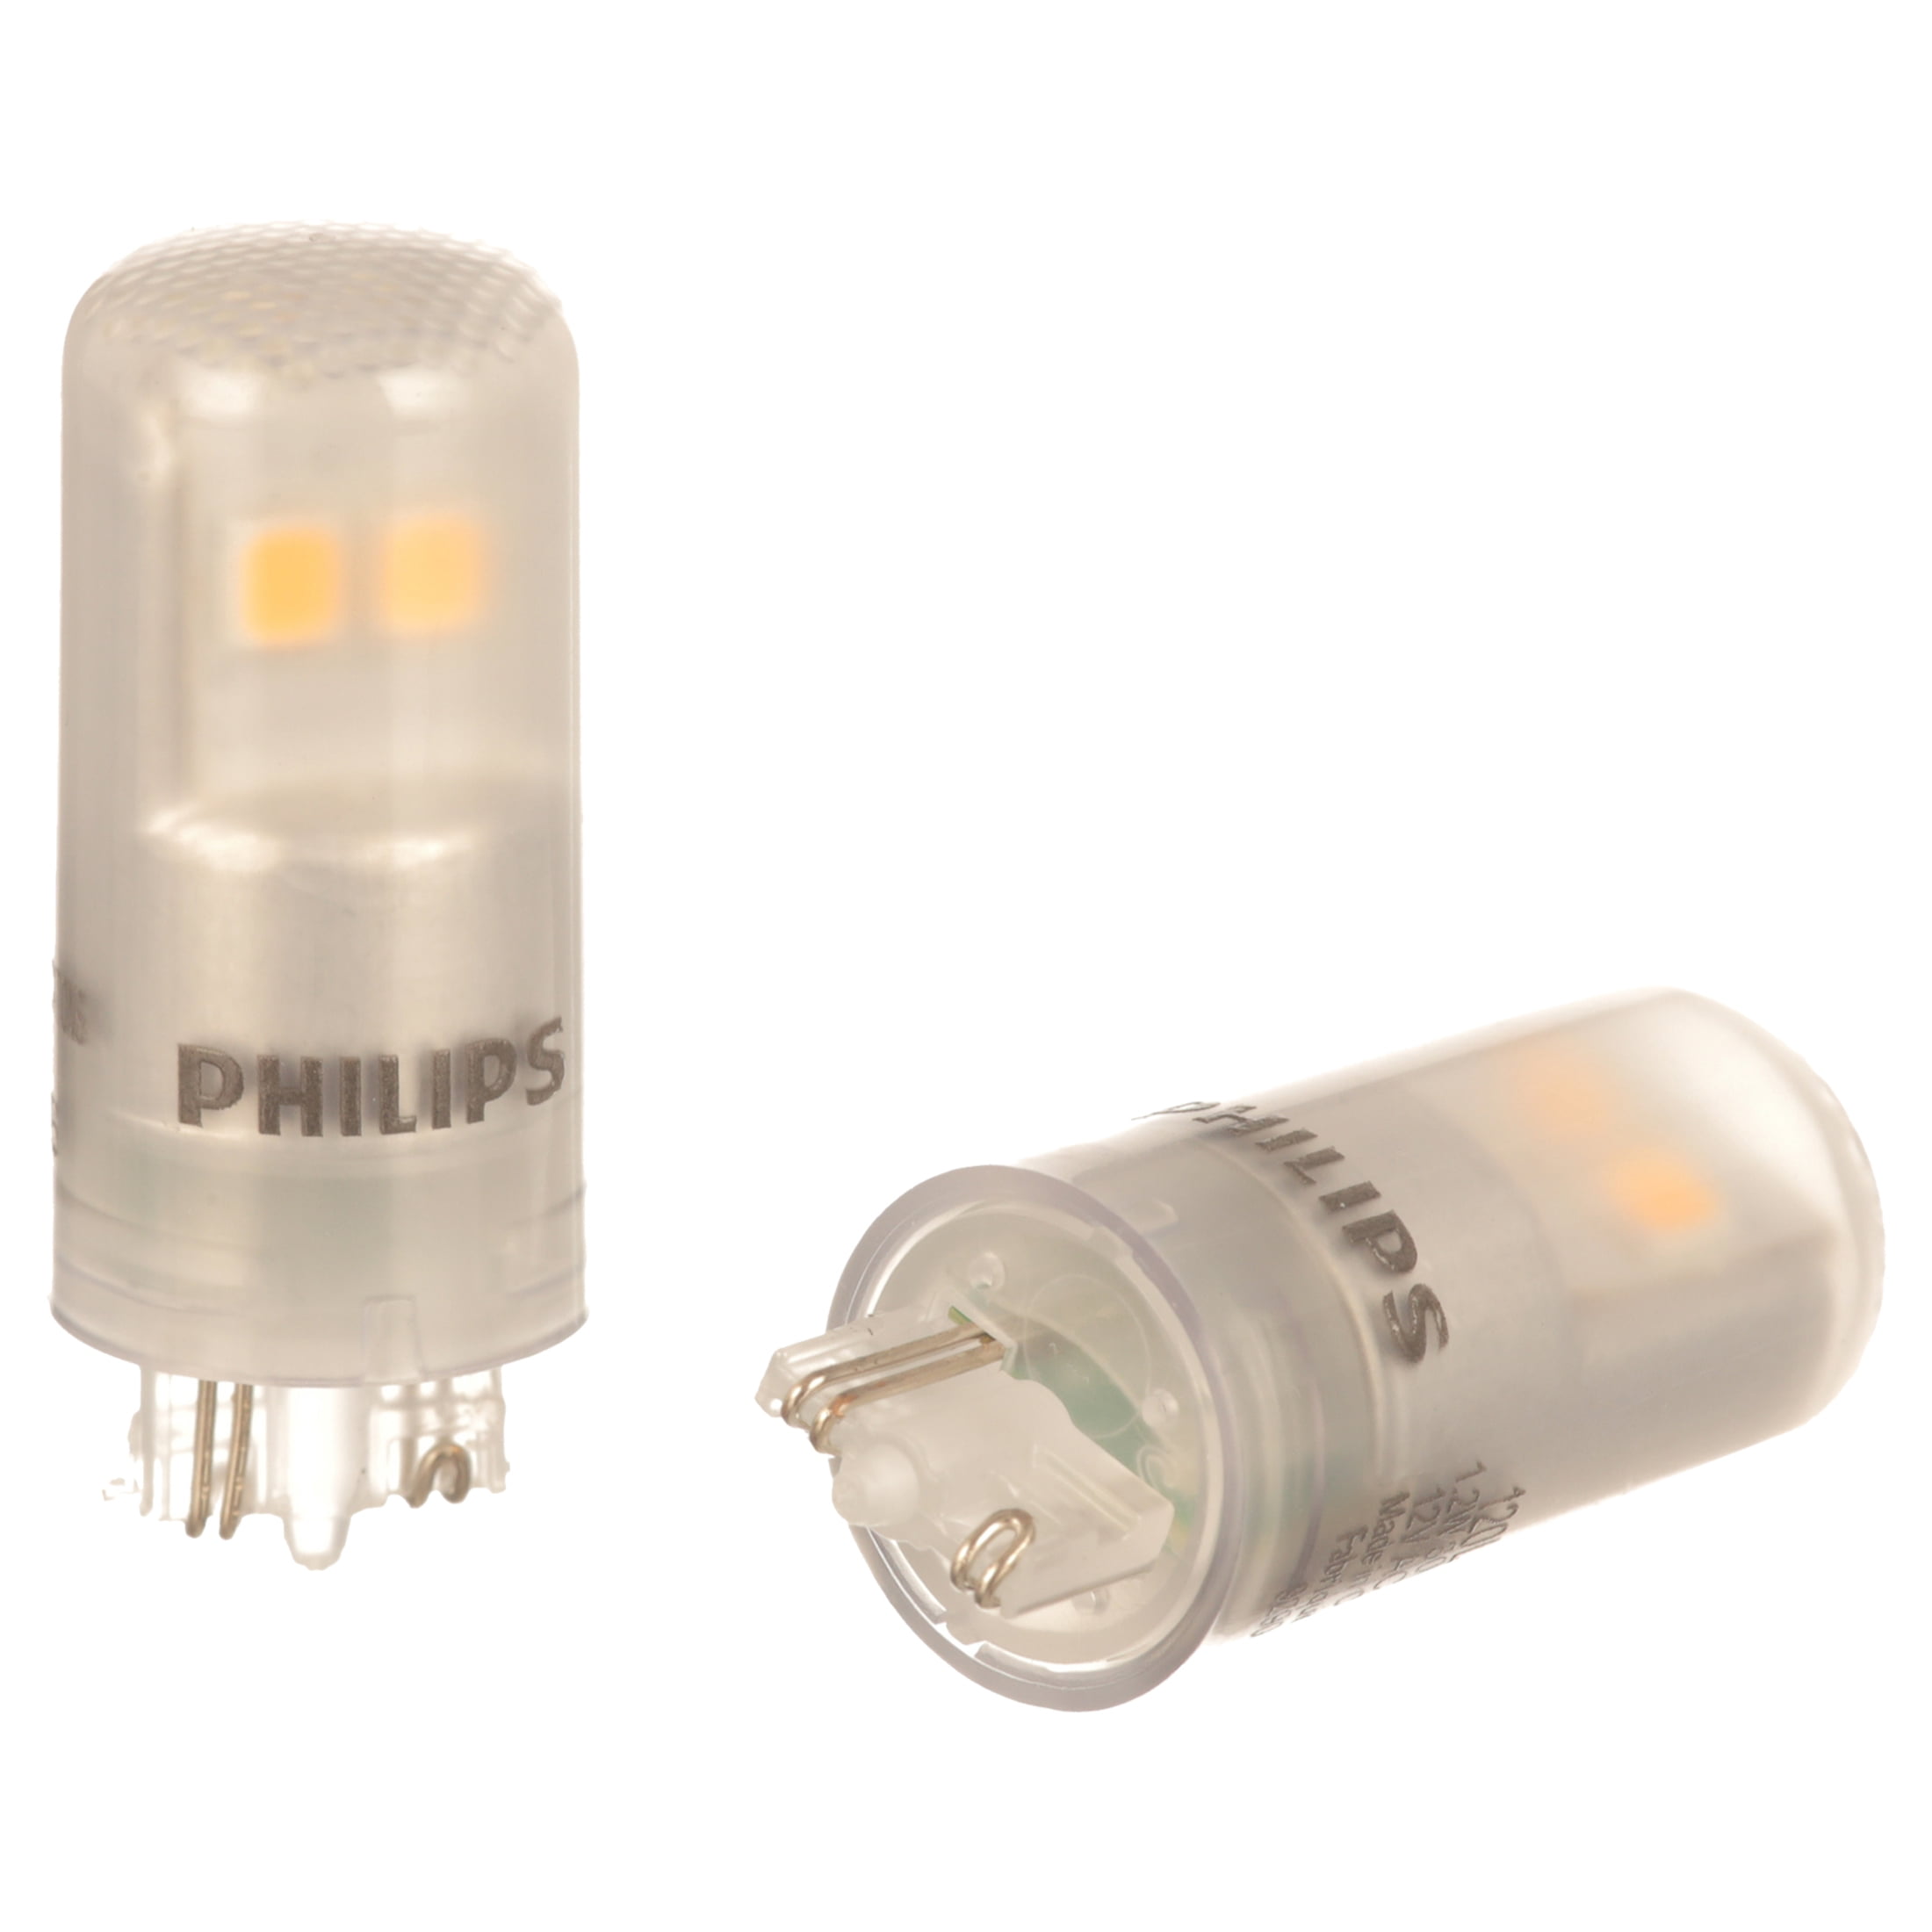 Robust tuberkulose at retfærdiggøre Phillips LED 7-Watt, 12-Volt T5 Landscape Tubular Light Bulb, Clear Soft  White, Non-dimmable, Wedge Base (2-Pack) - Walmart.com